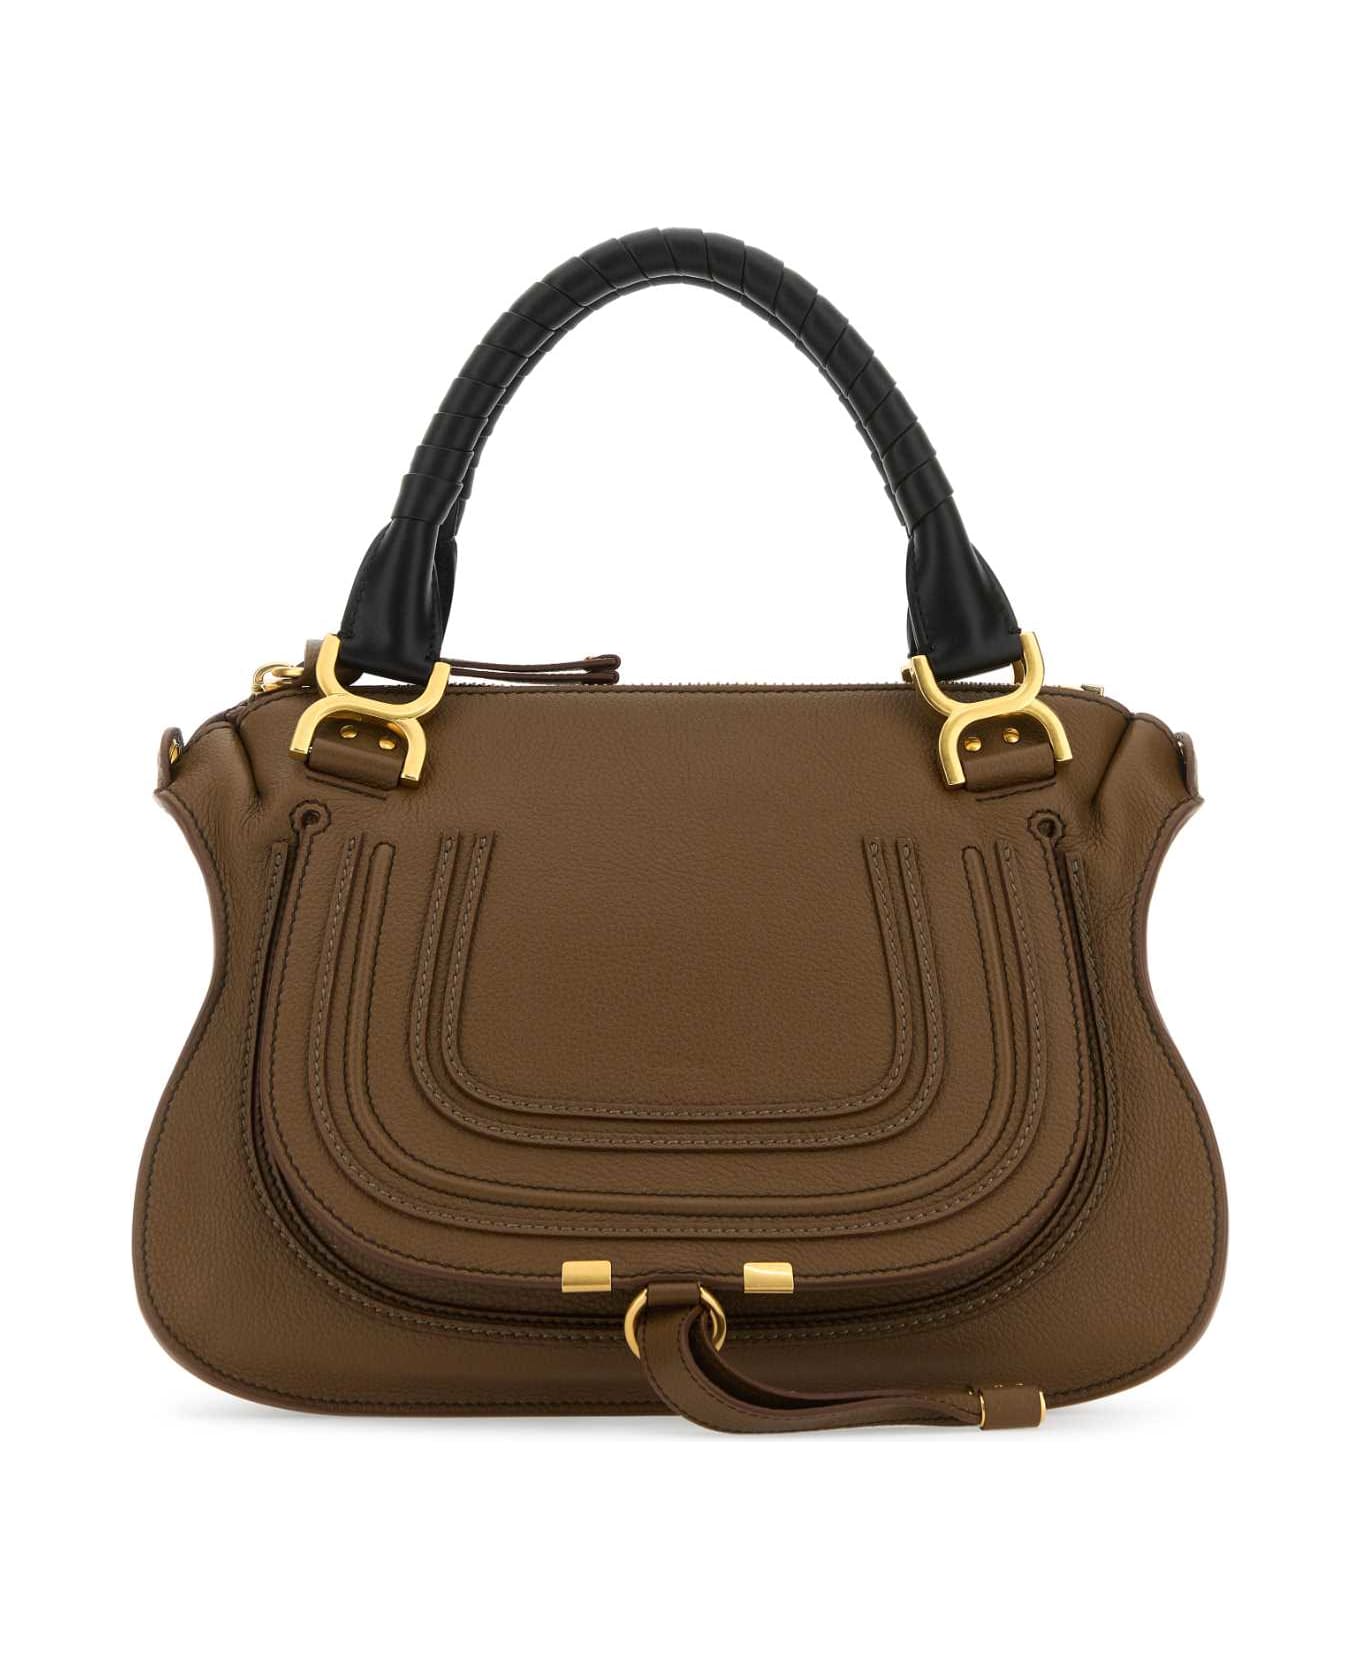 Chloé Brown Leather Small Marcie Handbag - PALMBROWN